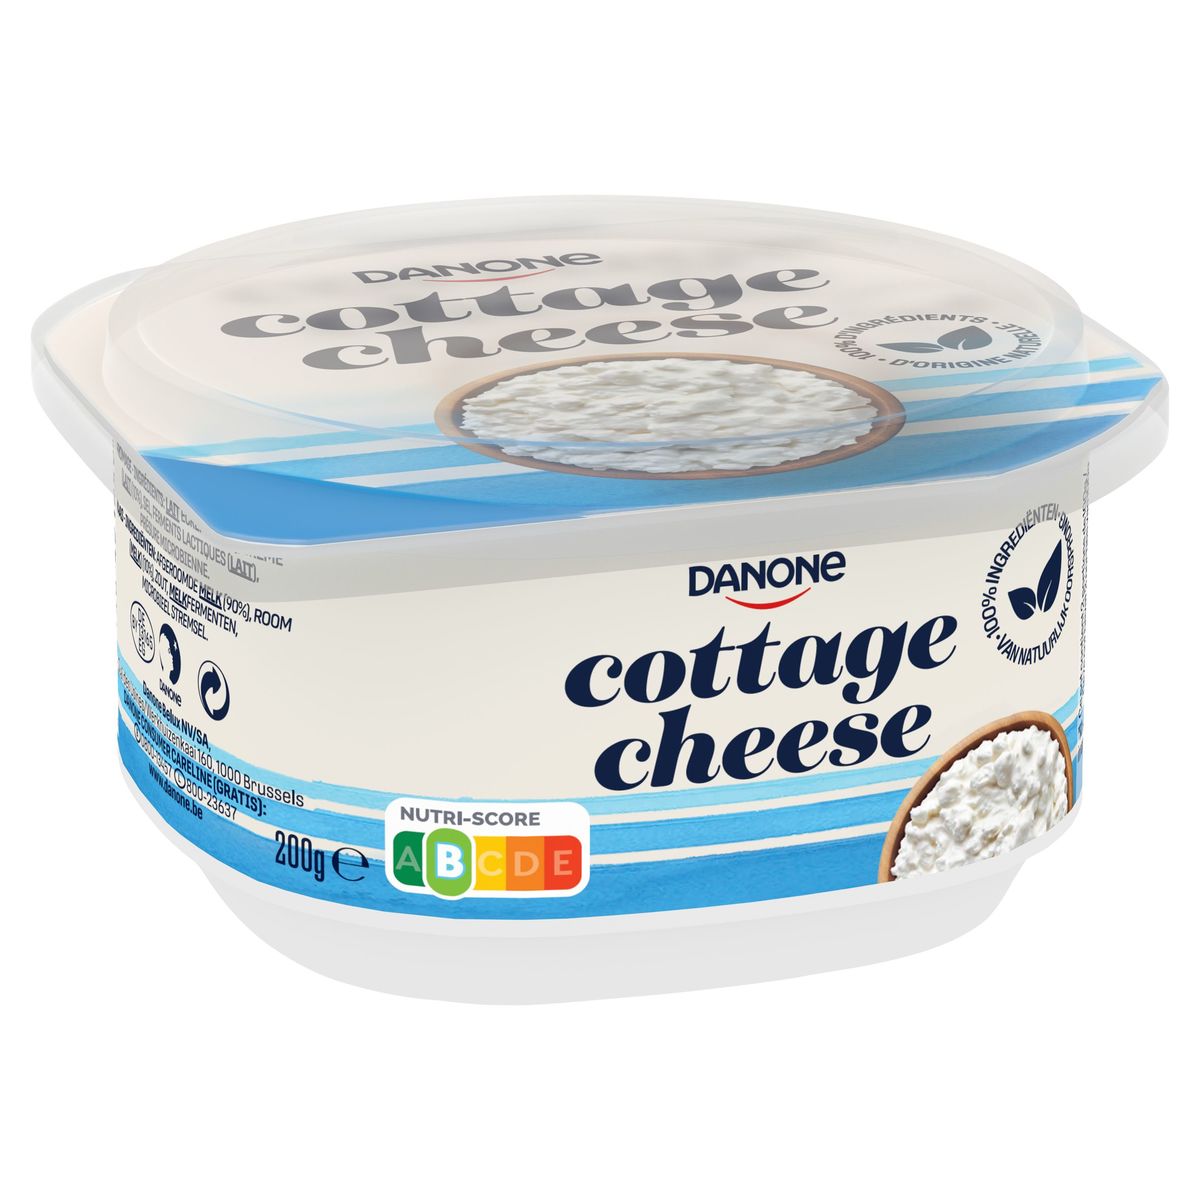 Danone Cottage Cheese 200 g